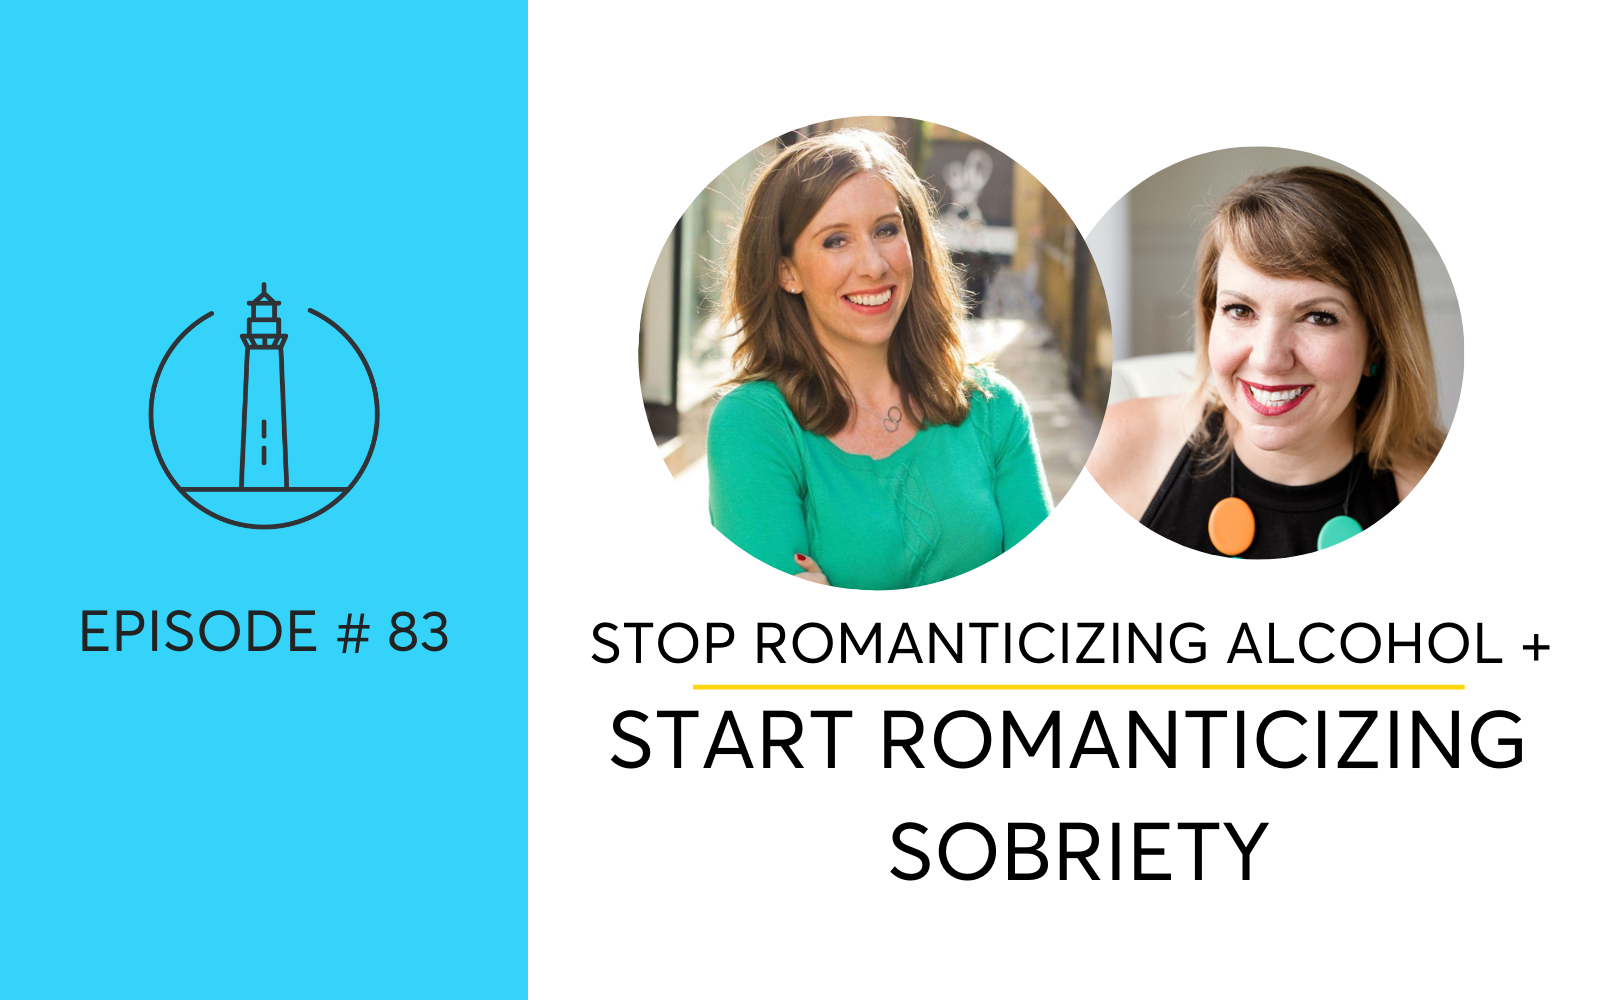 How To Stop Romanticizing Alcohol + Start Romanticizing Sobriety